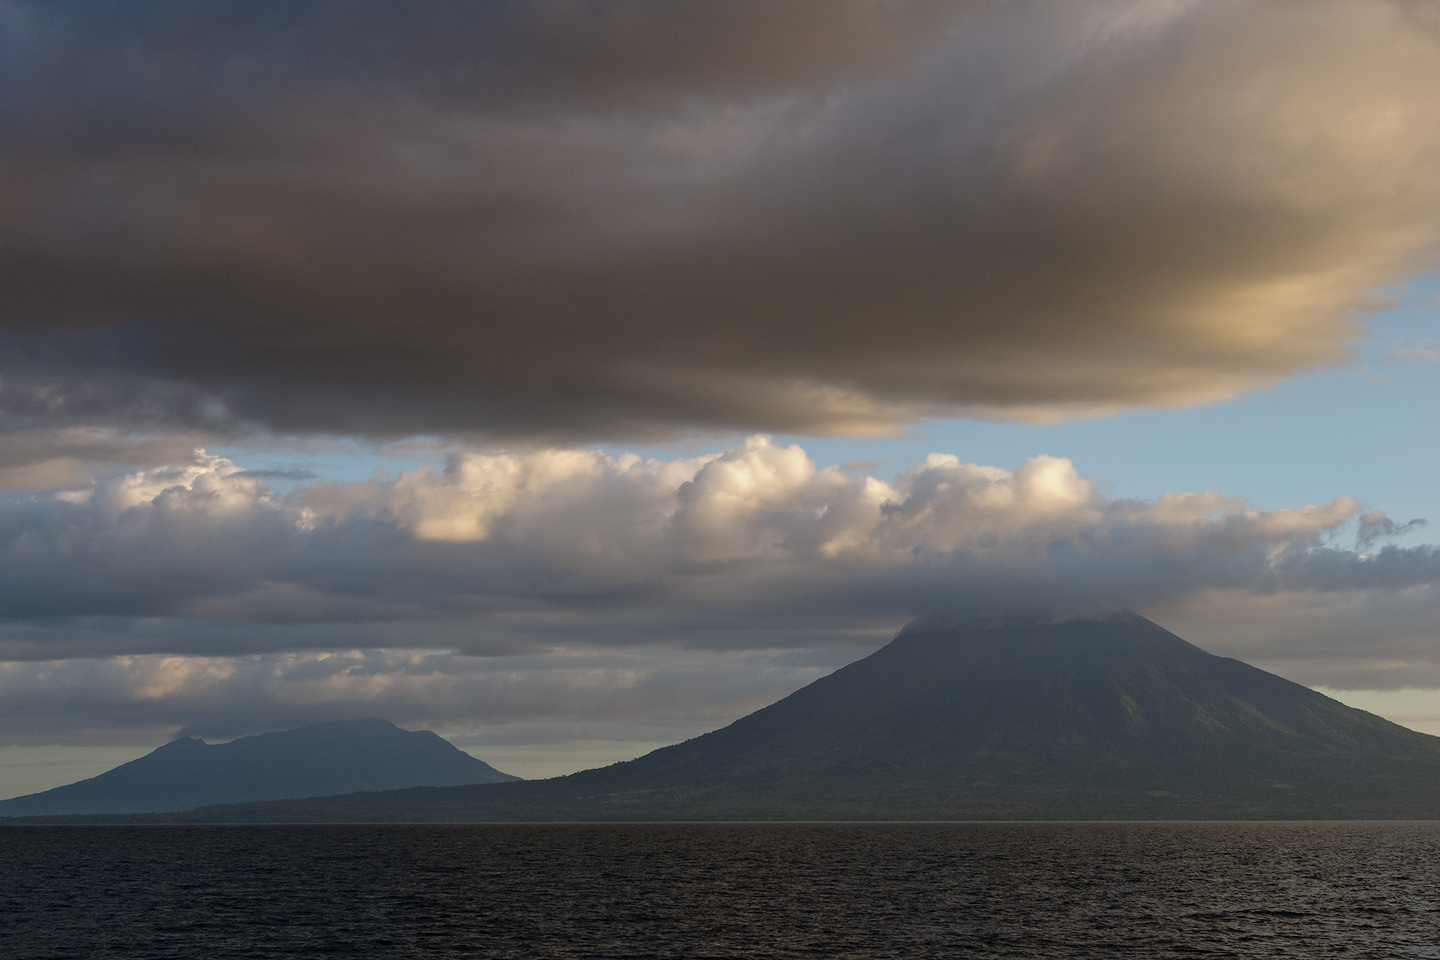 Two volcanoes on Isla de Ometepe